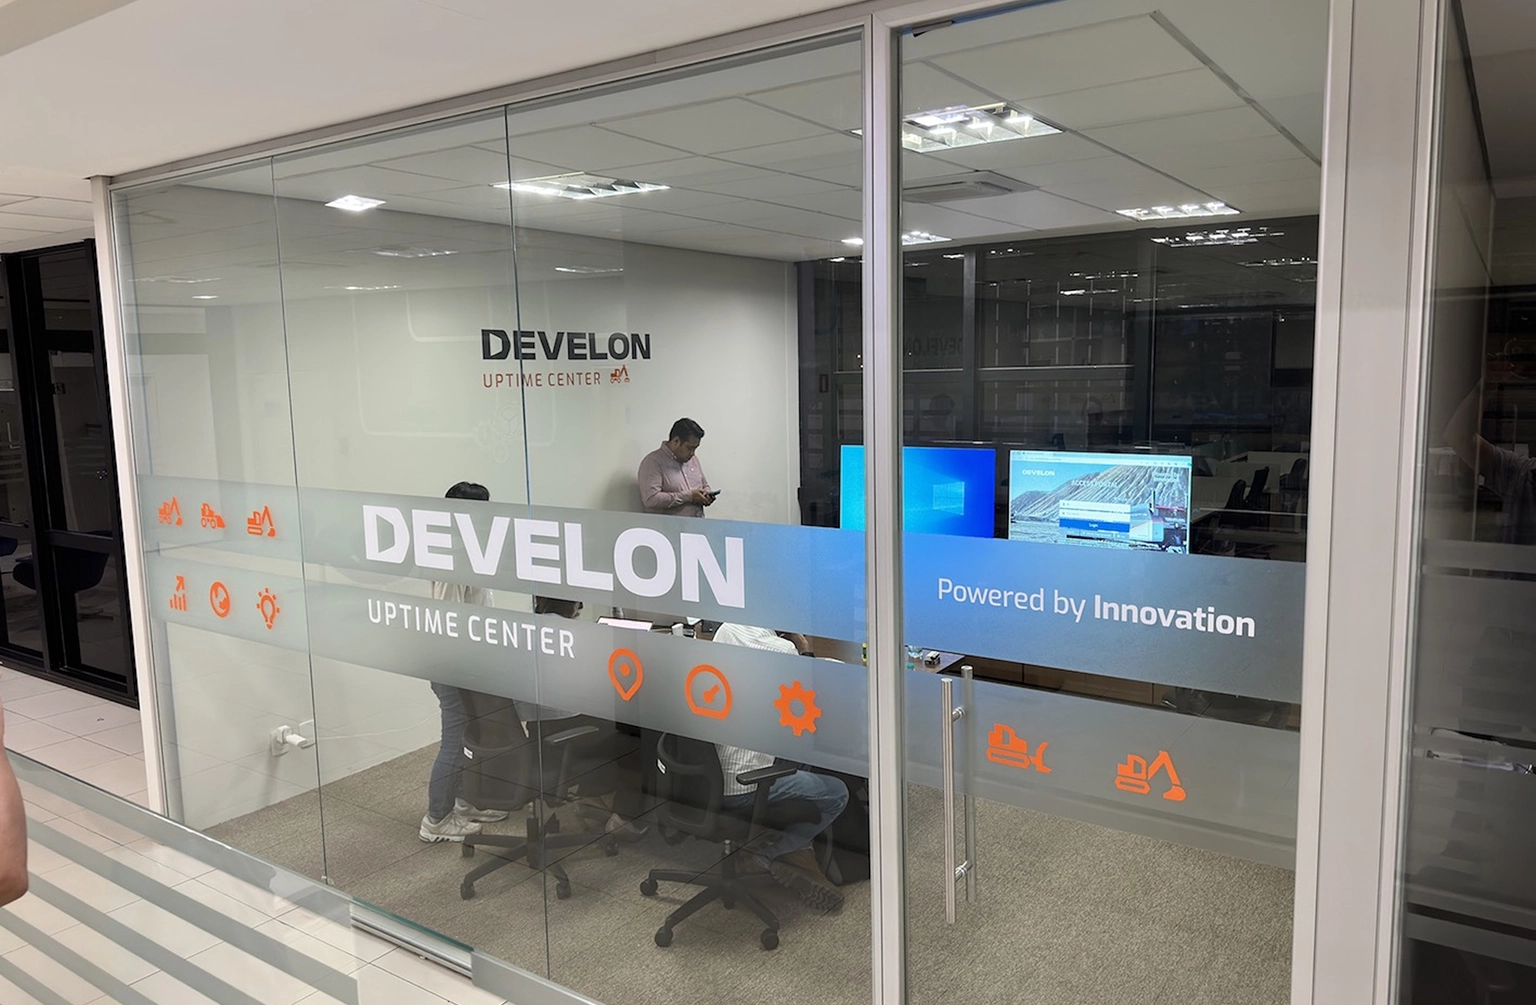 HD Hyundai Infracore Announces Global Launch Of ‘DEVELON Uptime Center’